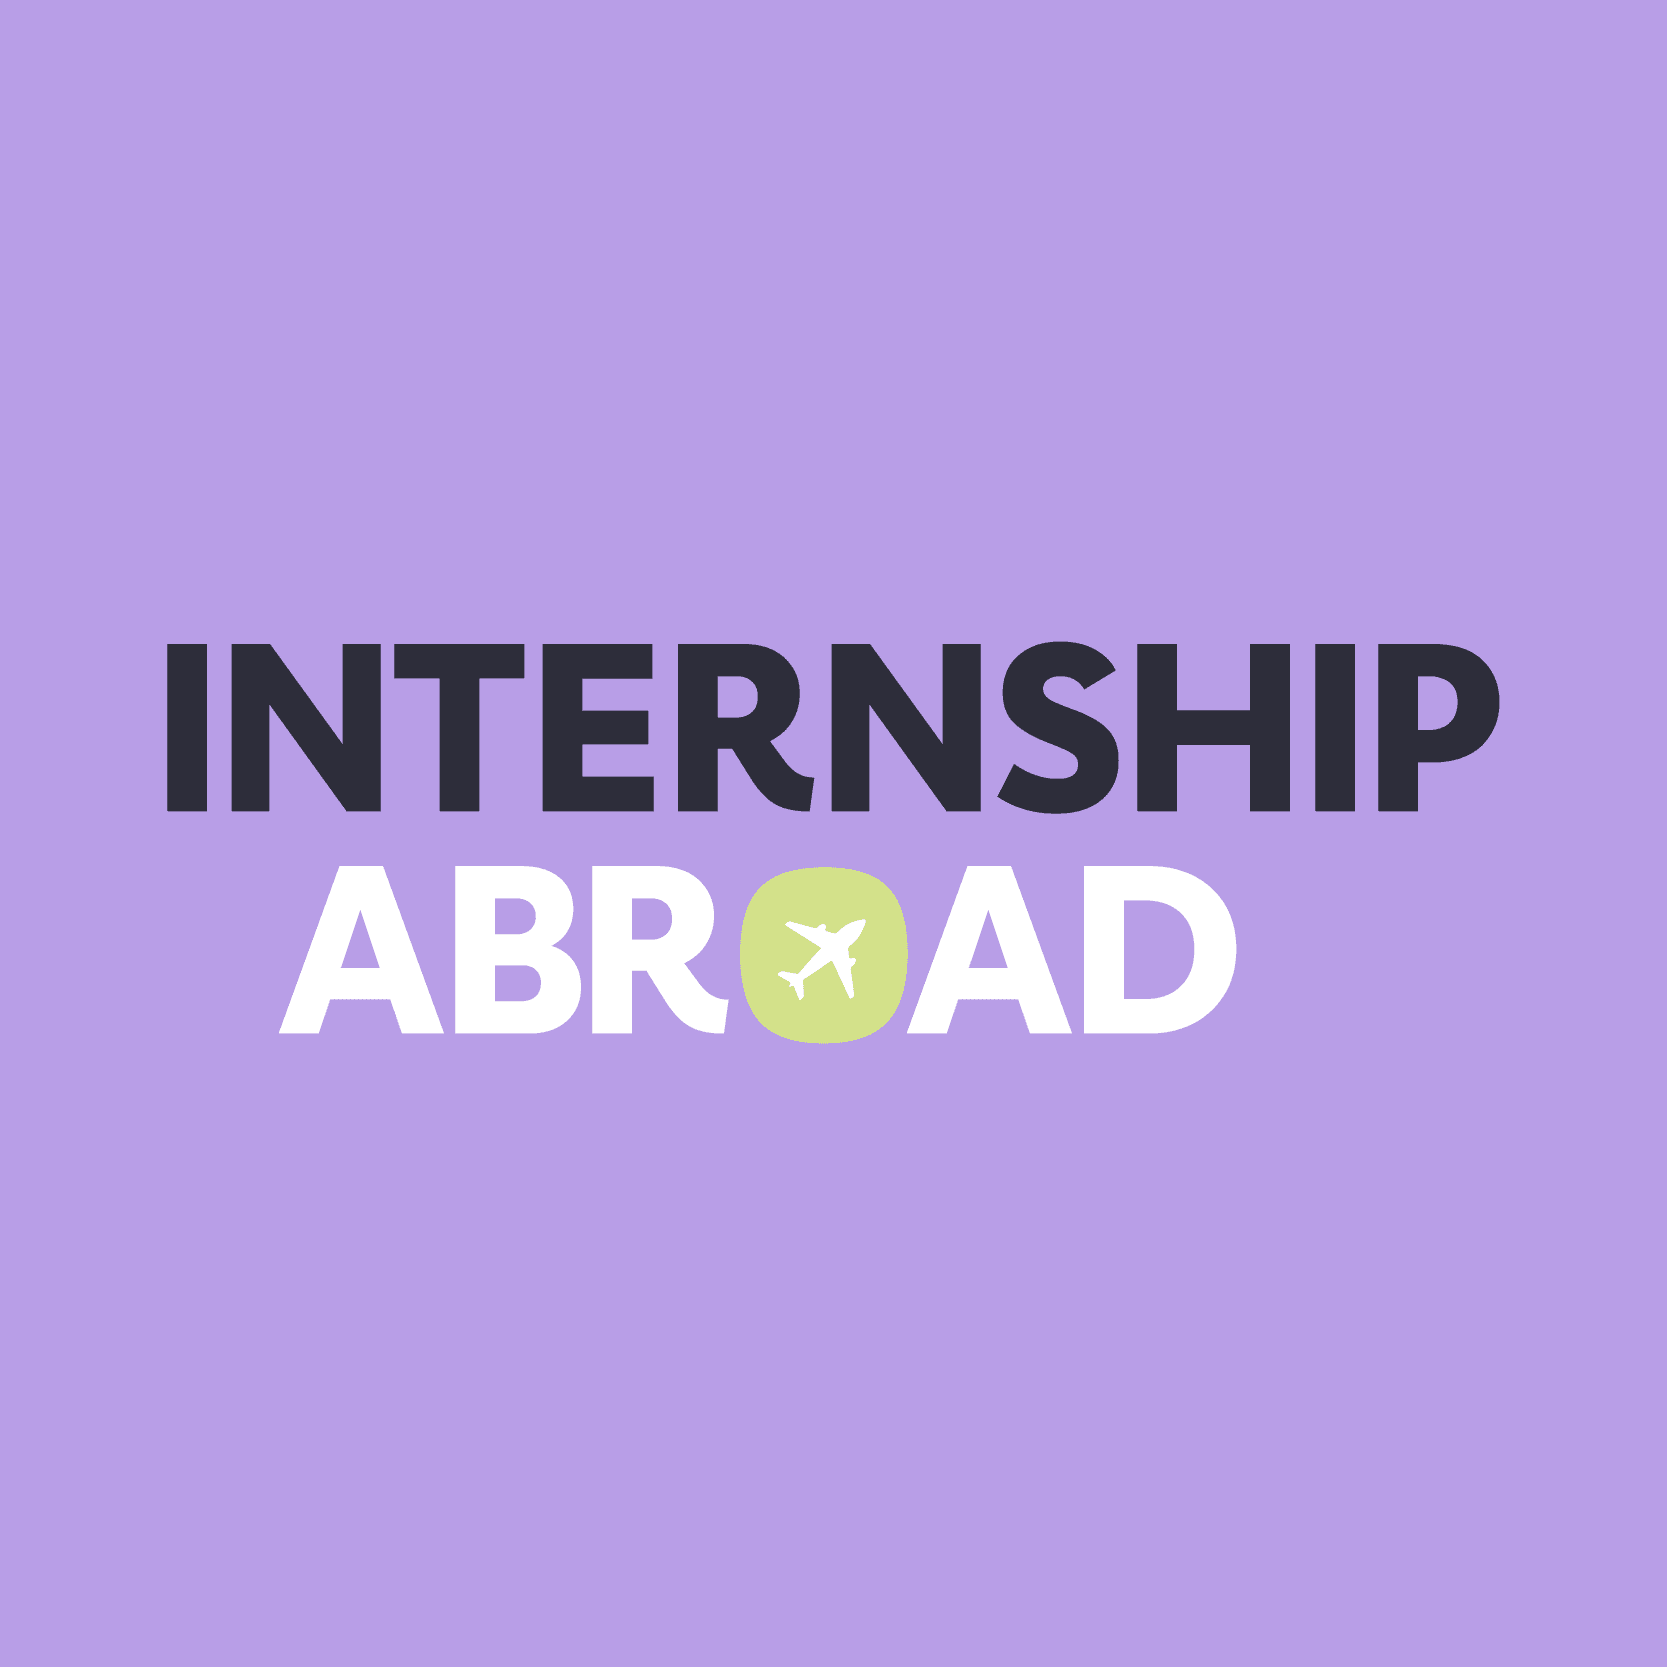 Internship Abroad logo